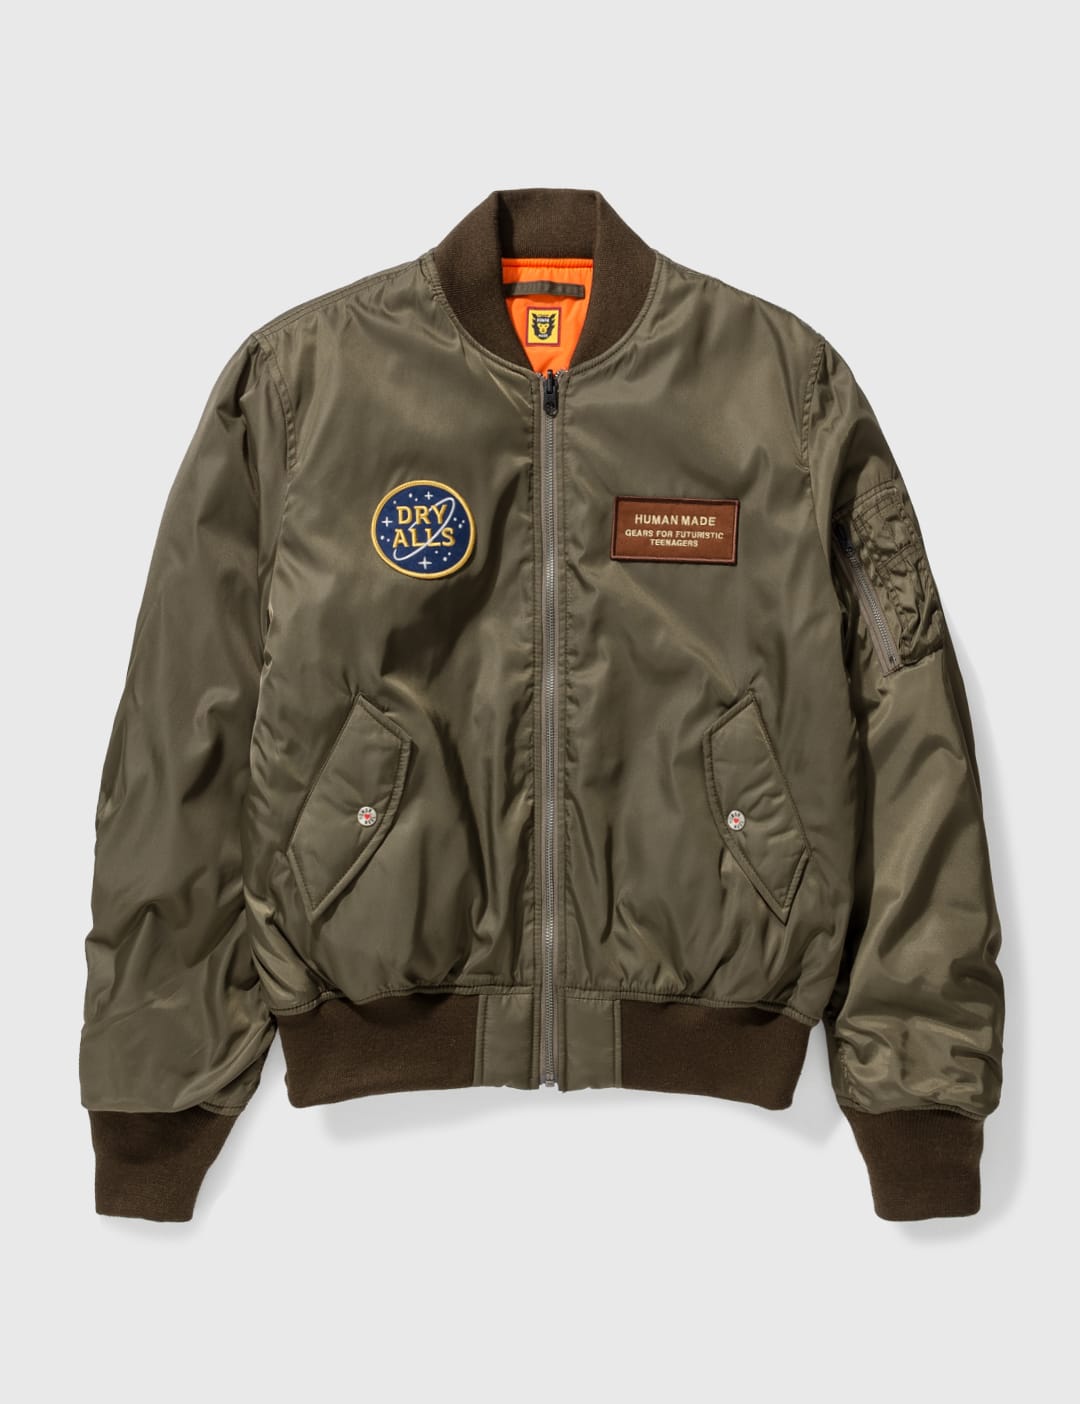 Human Made - MA-1 Jacket | HBX - Globally Curated Fashion and